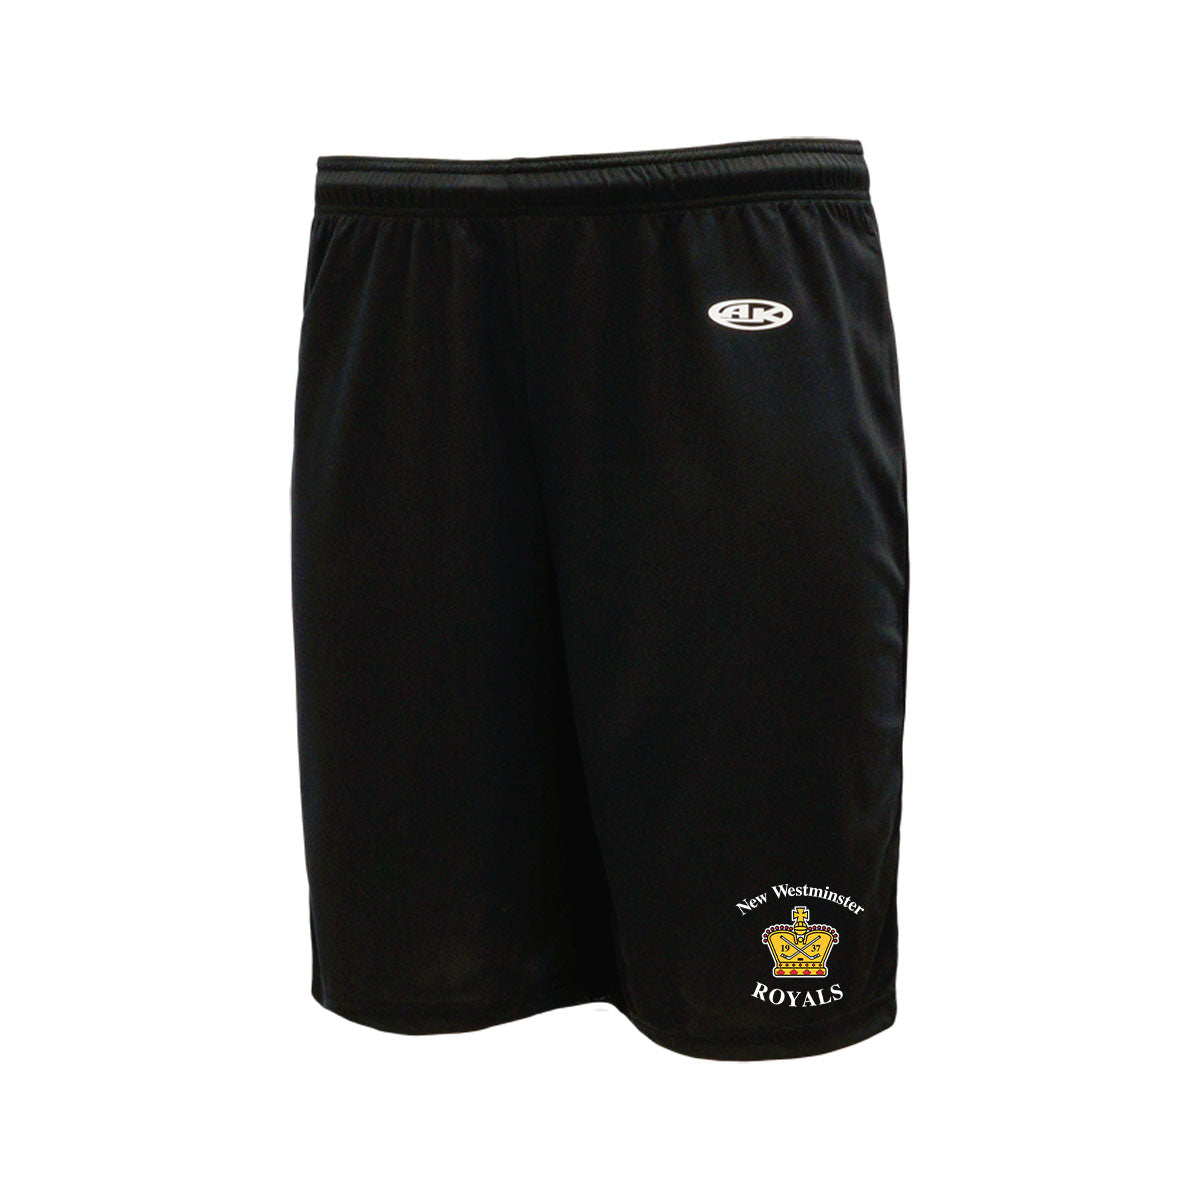 New West Royals -- Senior Pocketed Shorts